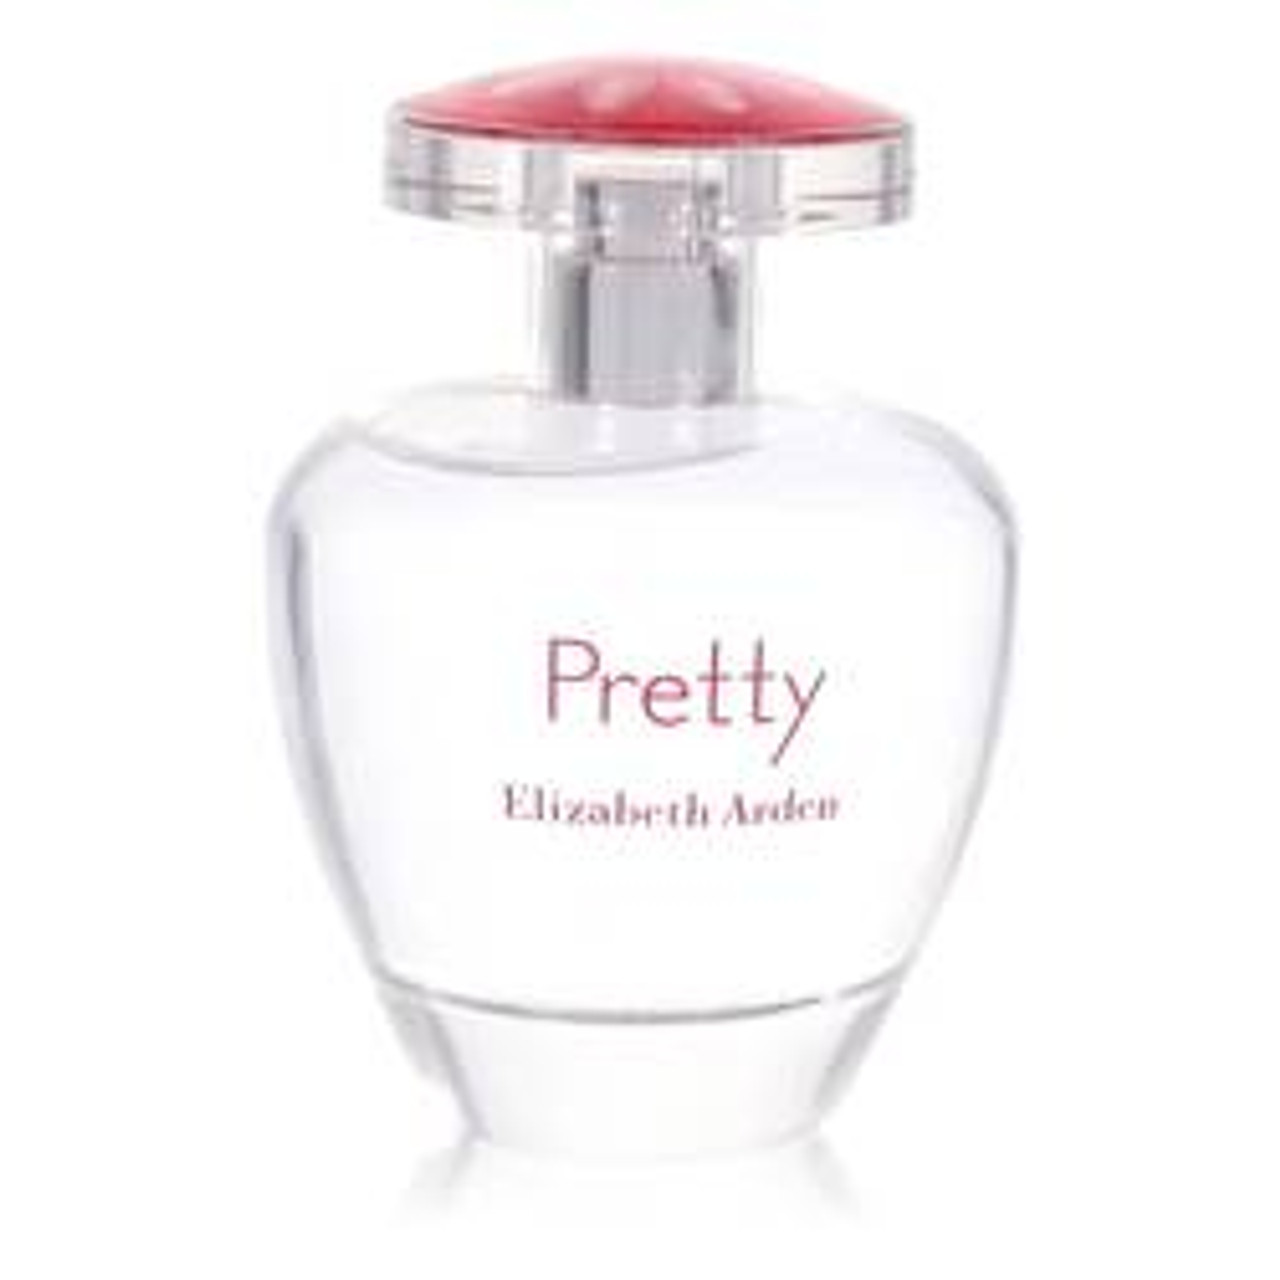 Pretty Perfume By Elizabeth Arden Eau De Parfum Spray (Tester) 3.4 oz for Women - [From 50.33 - Choose pk Qty ] - *Ships from Miami